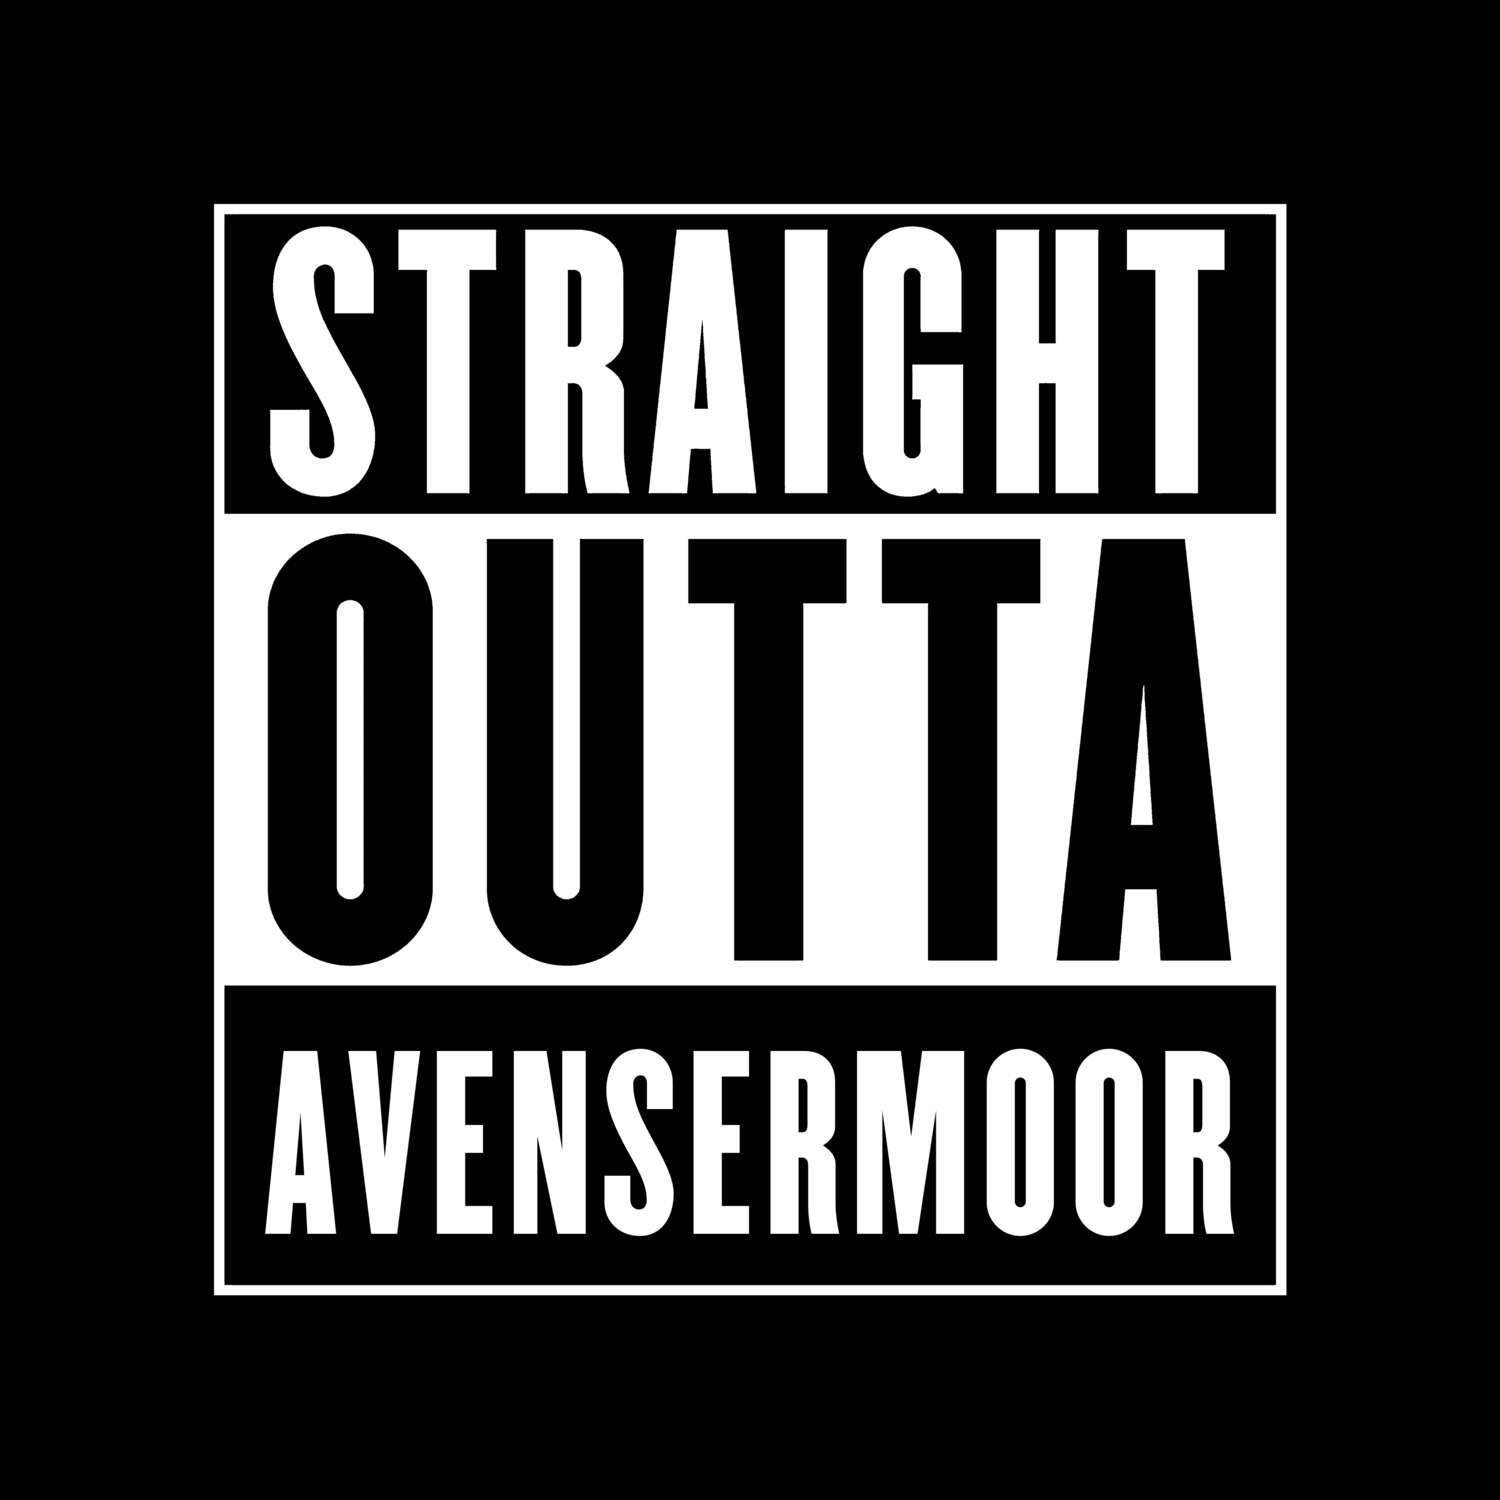 Avensermoor T-Shirt »Straight Outta«